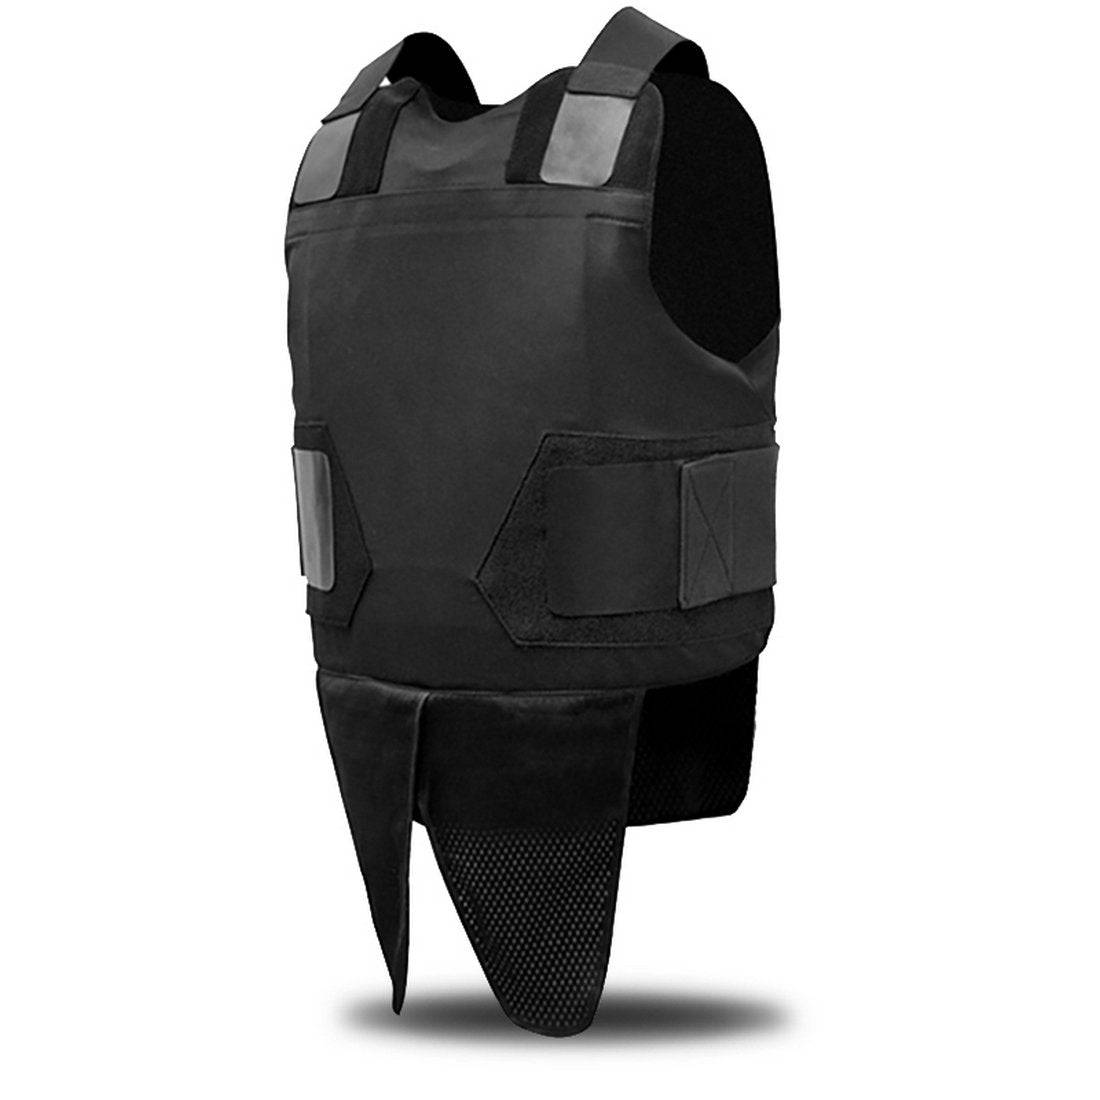 Without Sleeves Aramid/Kevlar Lightweight Bulletproof Vests, Model